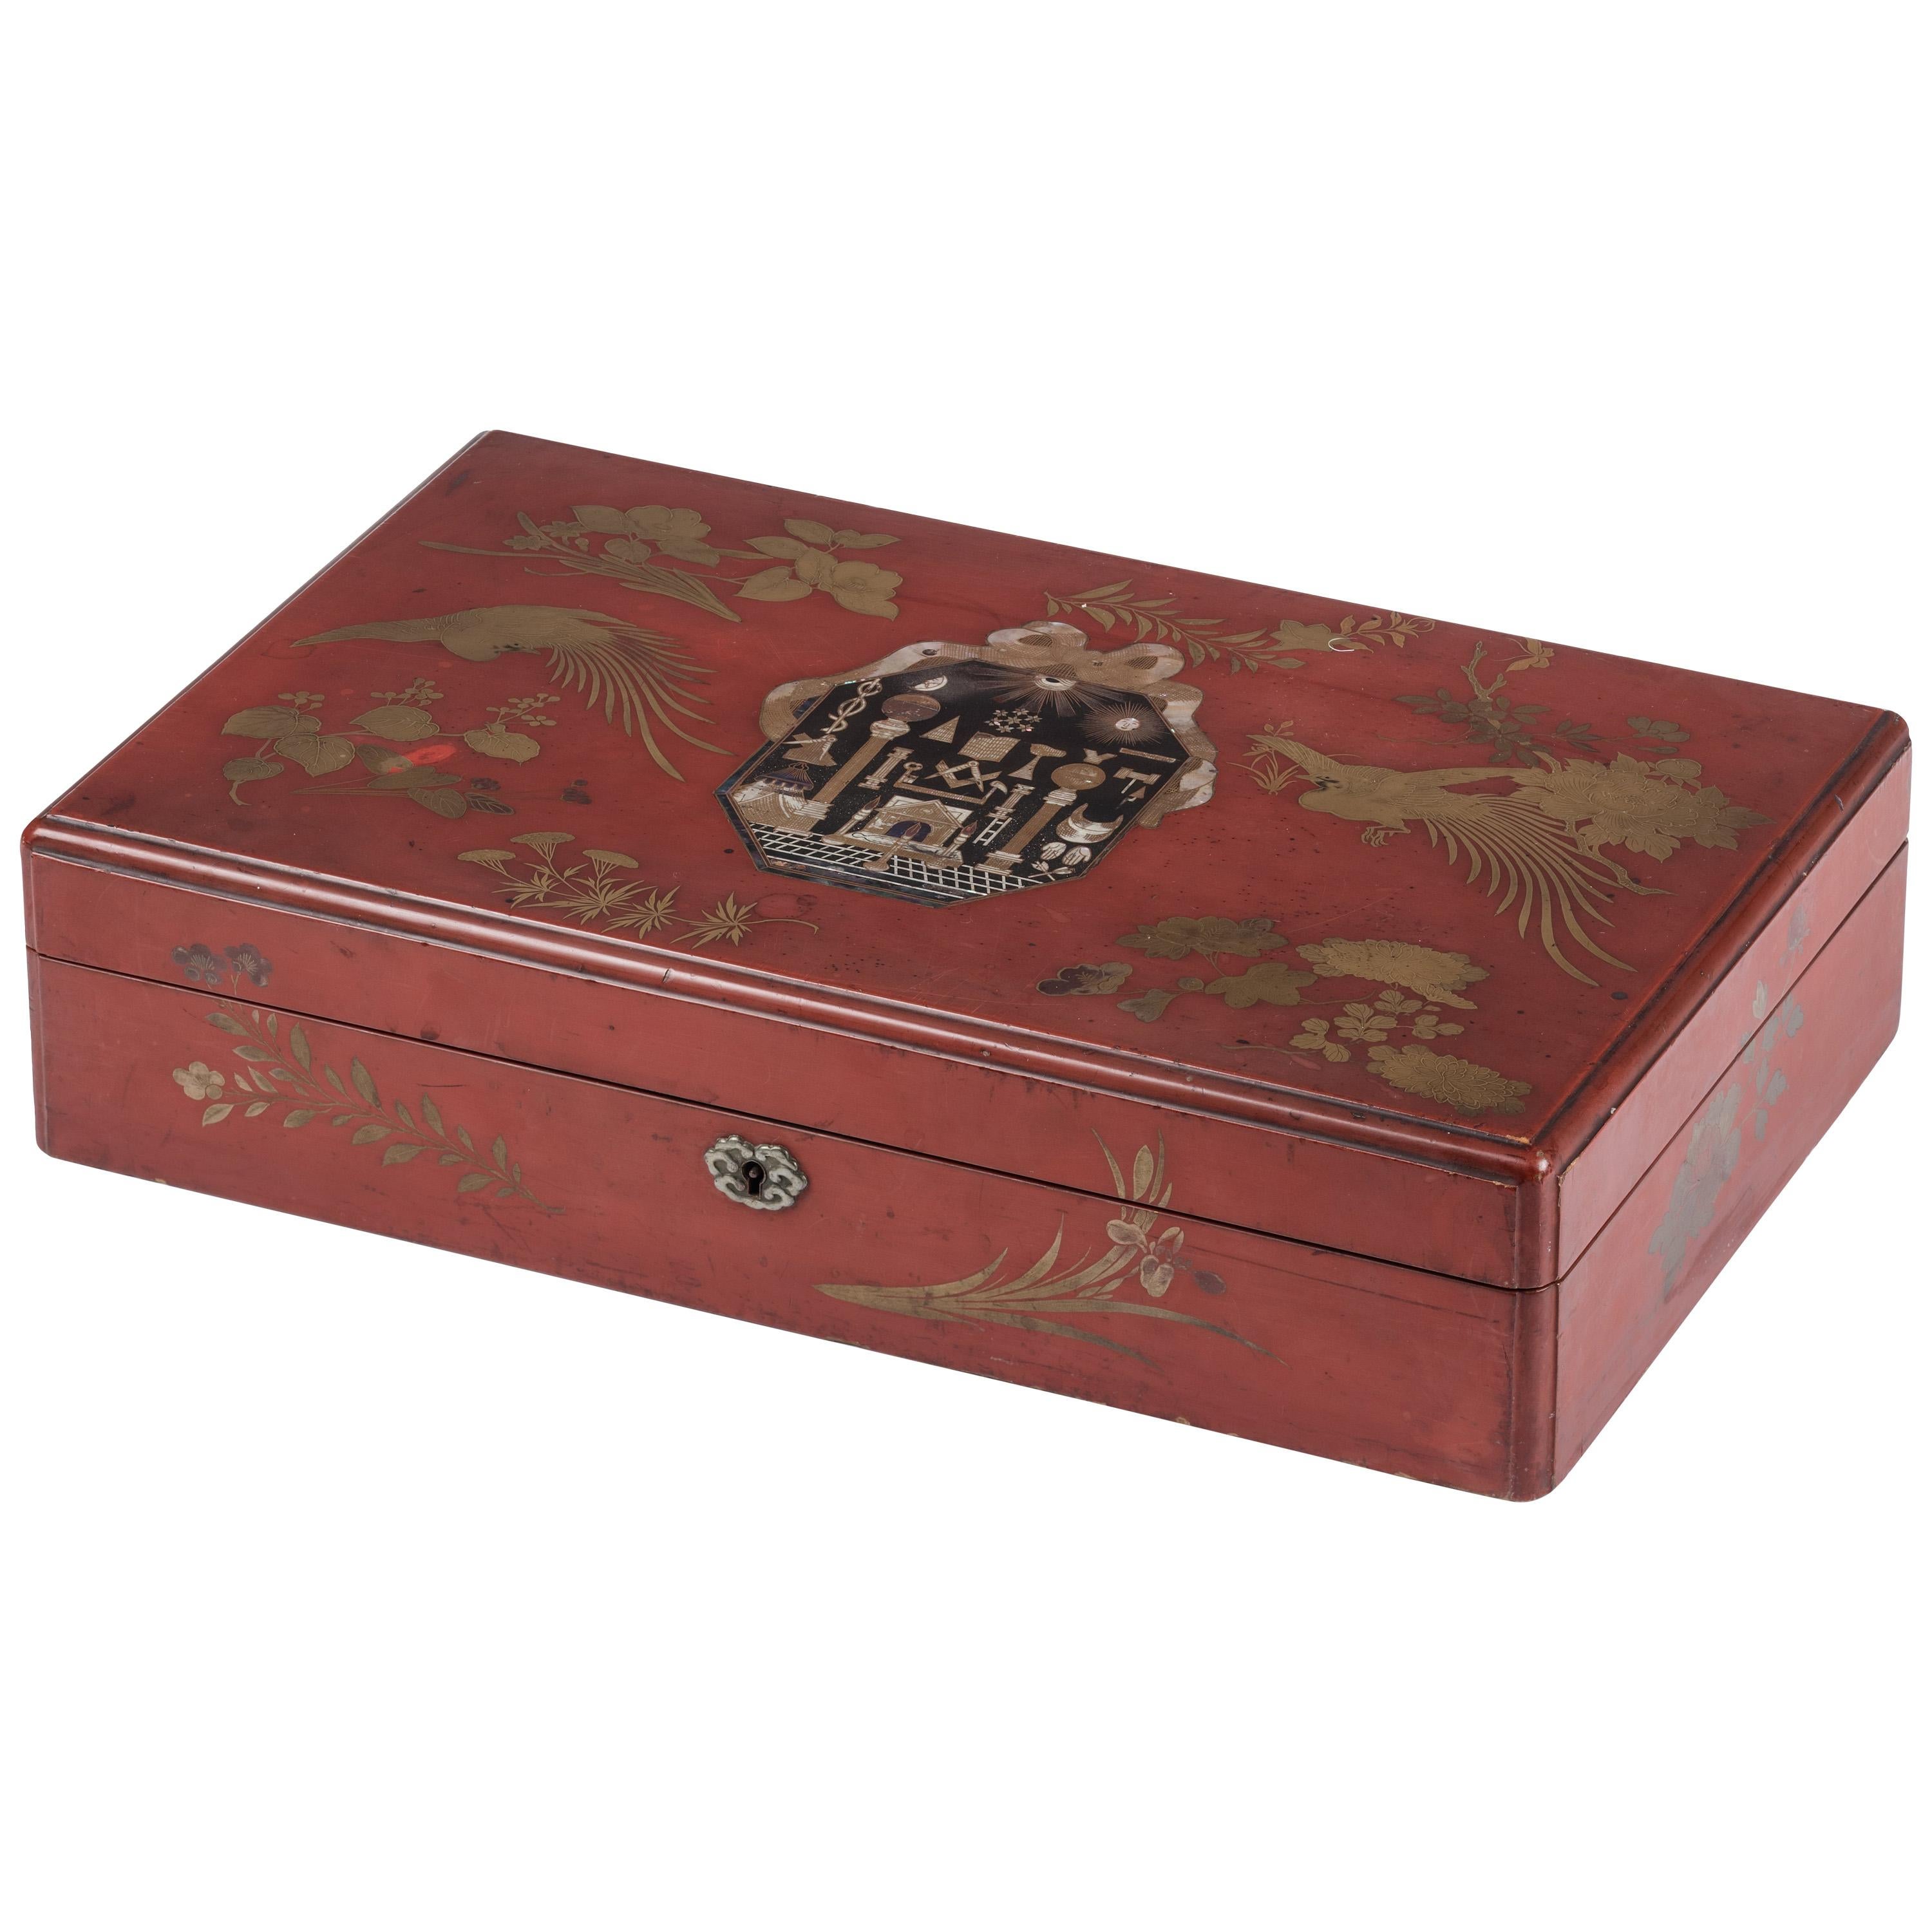 Fine Japanese Export Red Lacquer Box with Masonic Symbols, circa 1800